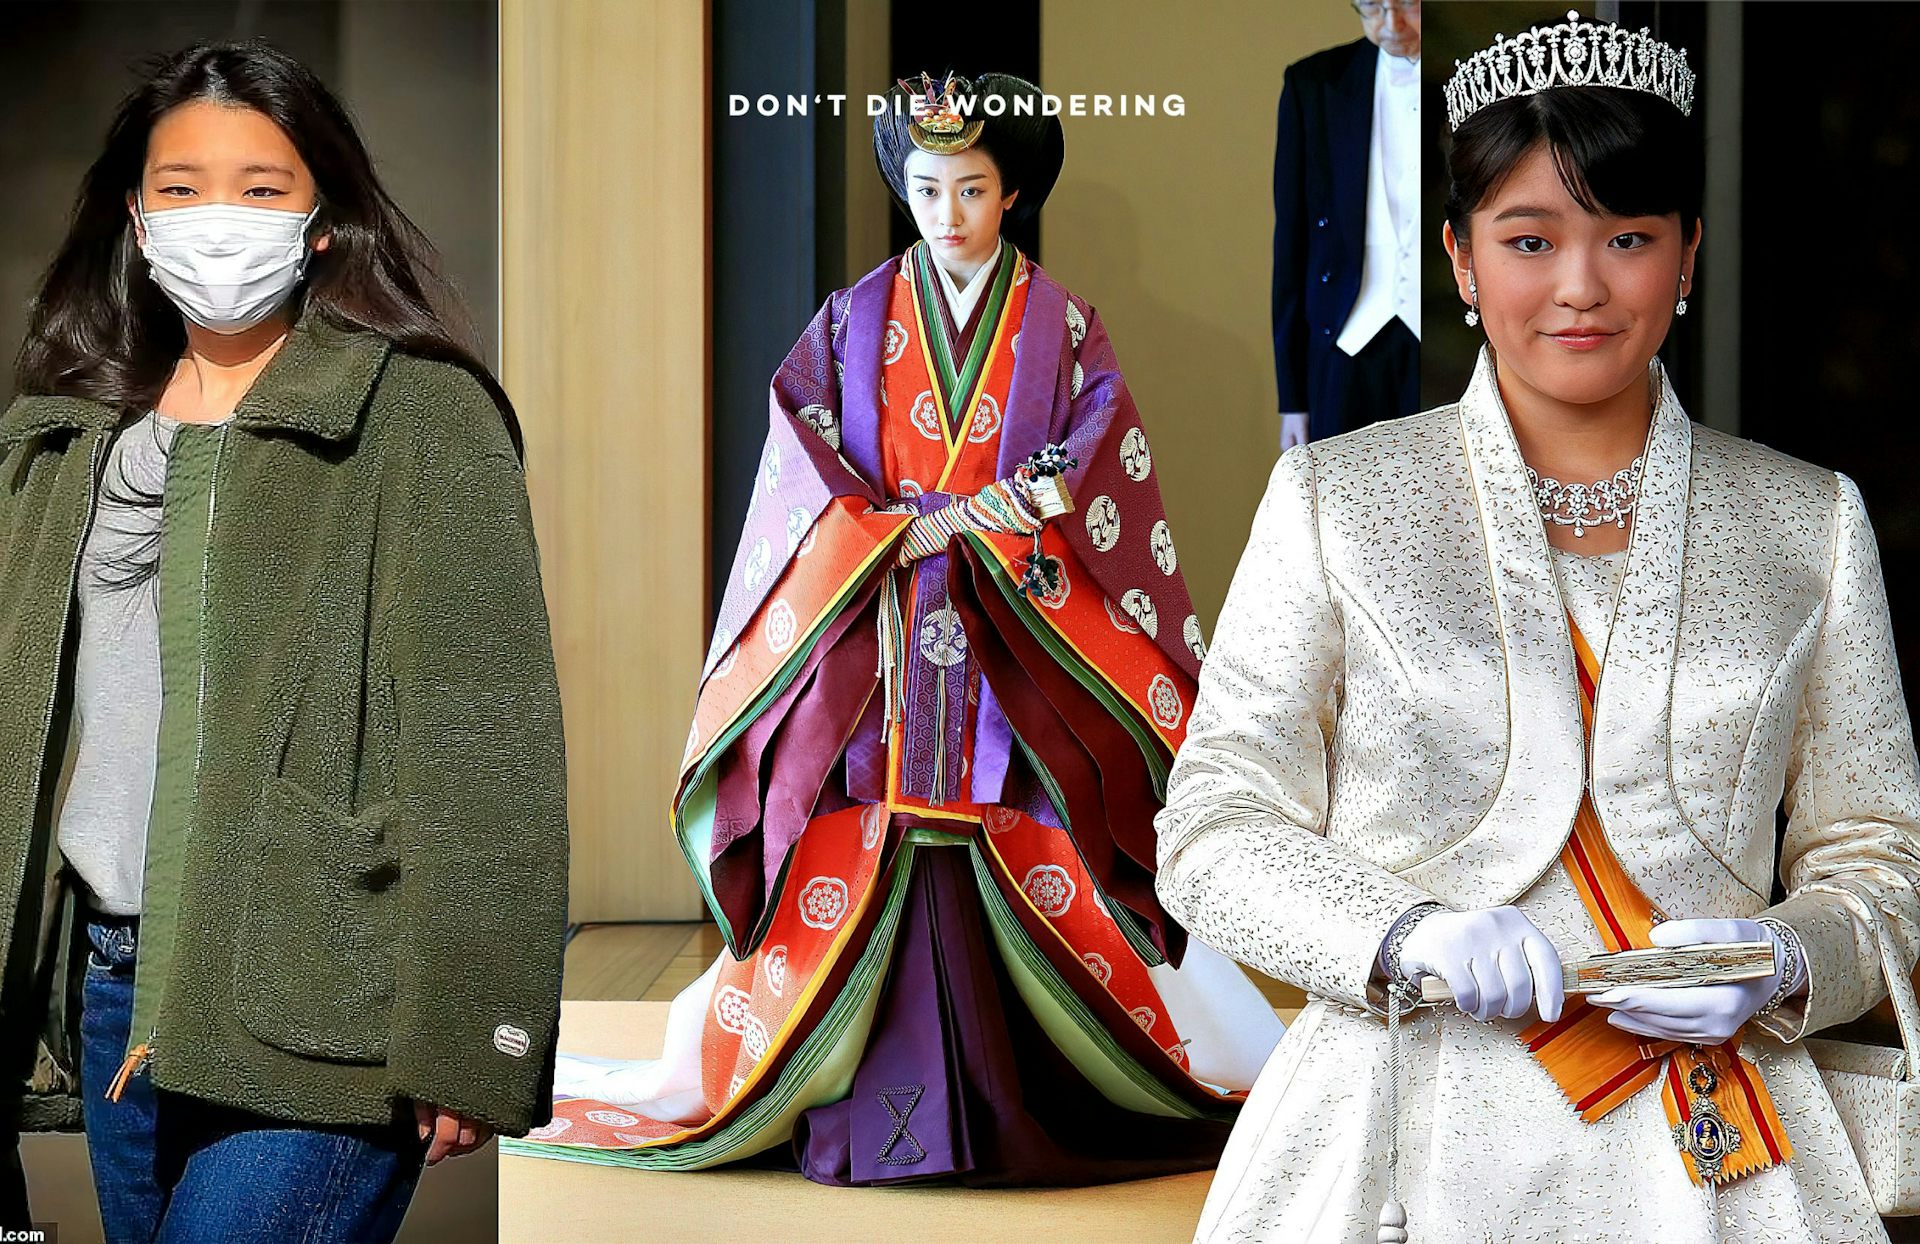 Japan’s Ex-Princess, Mako Komuro, Is Interning At The Met